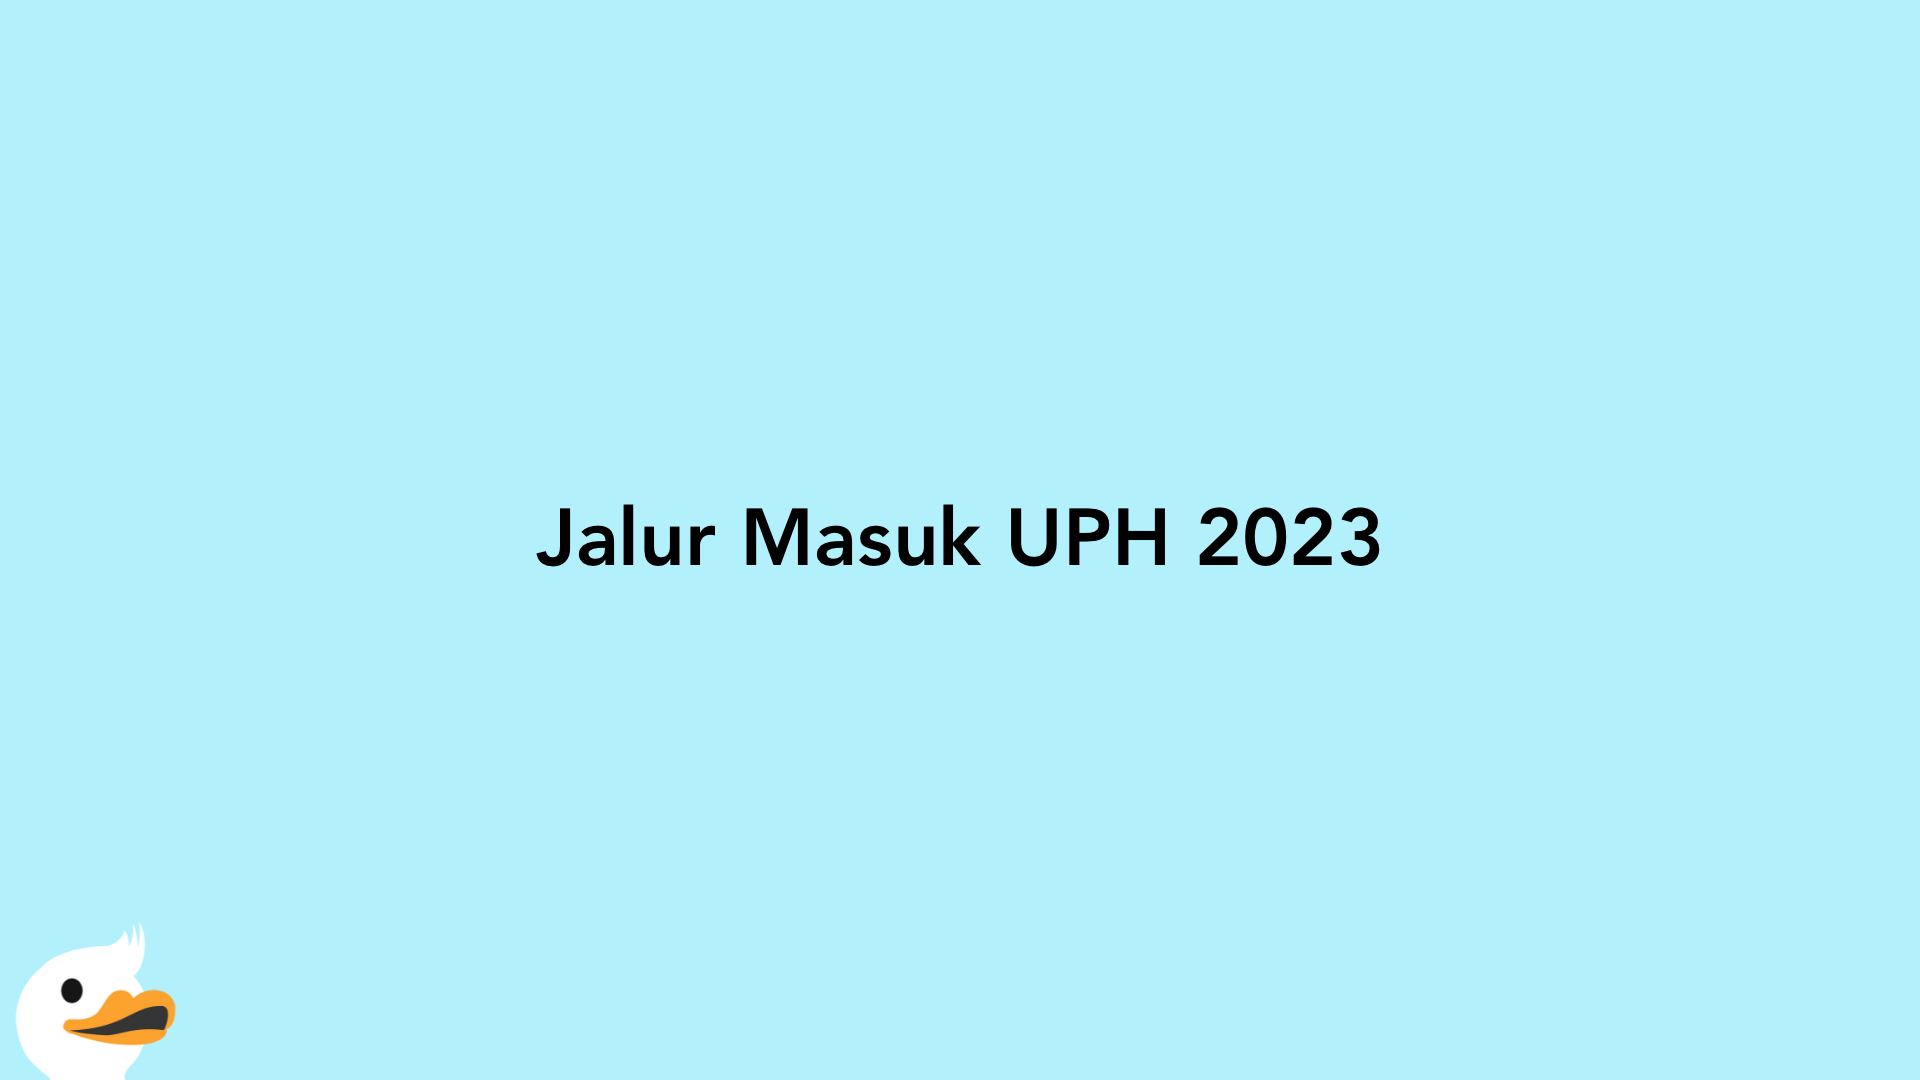 Jalur Masuk UPH 2023